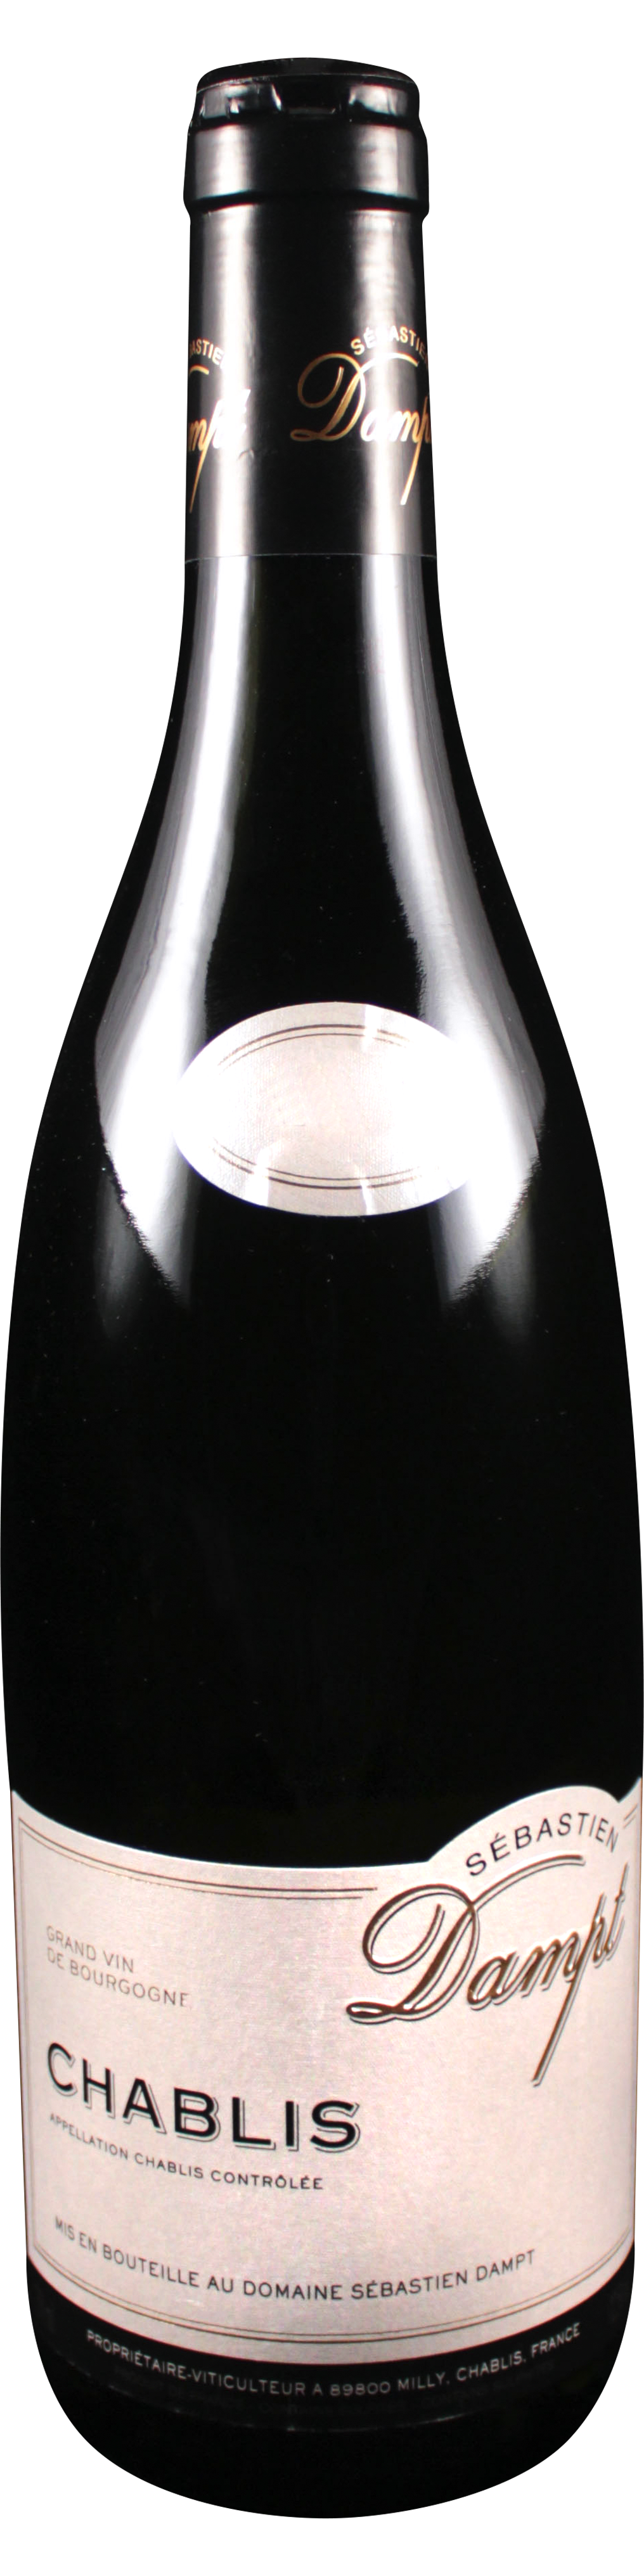 Bottle shot of 2012 Chablis